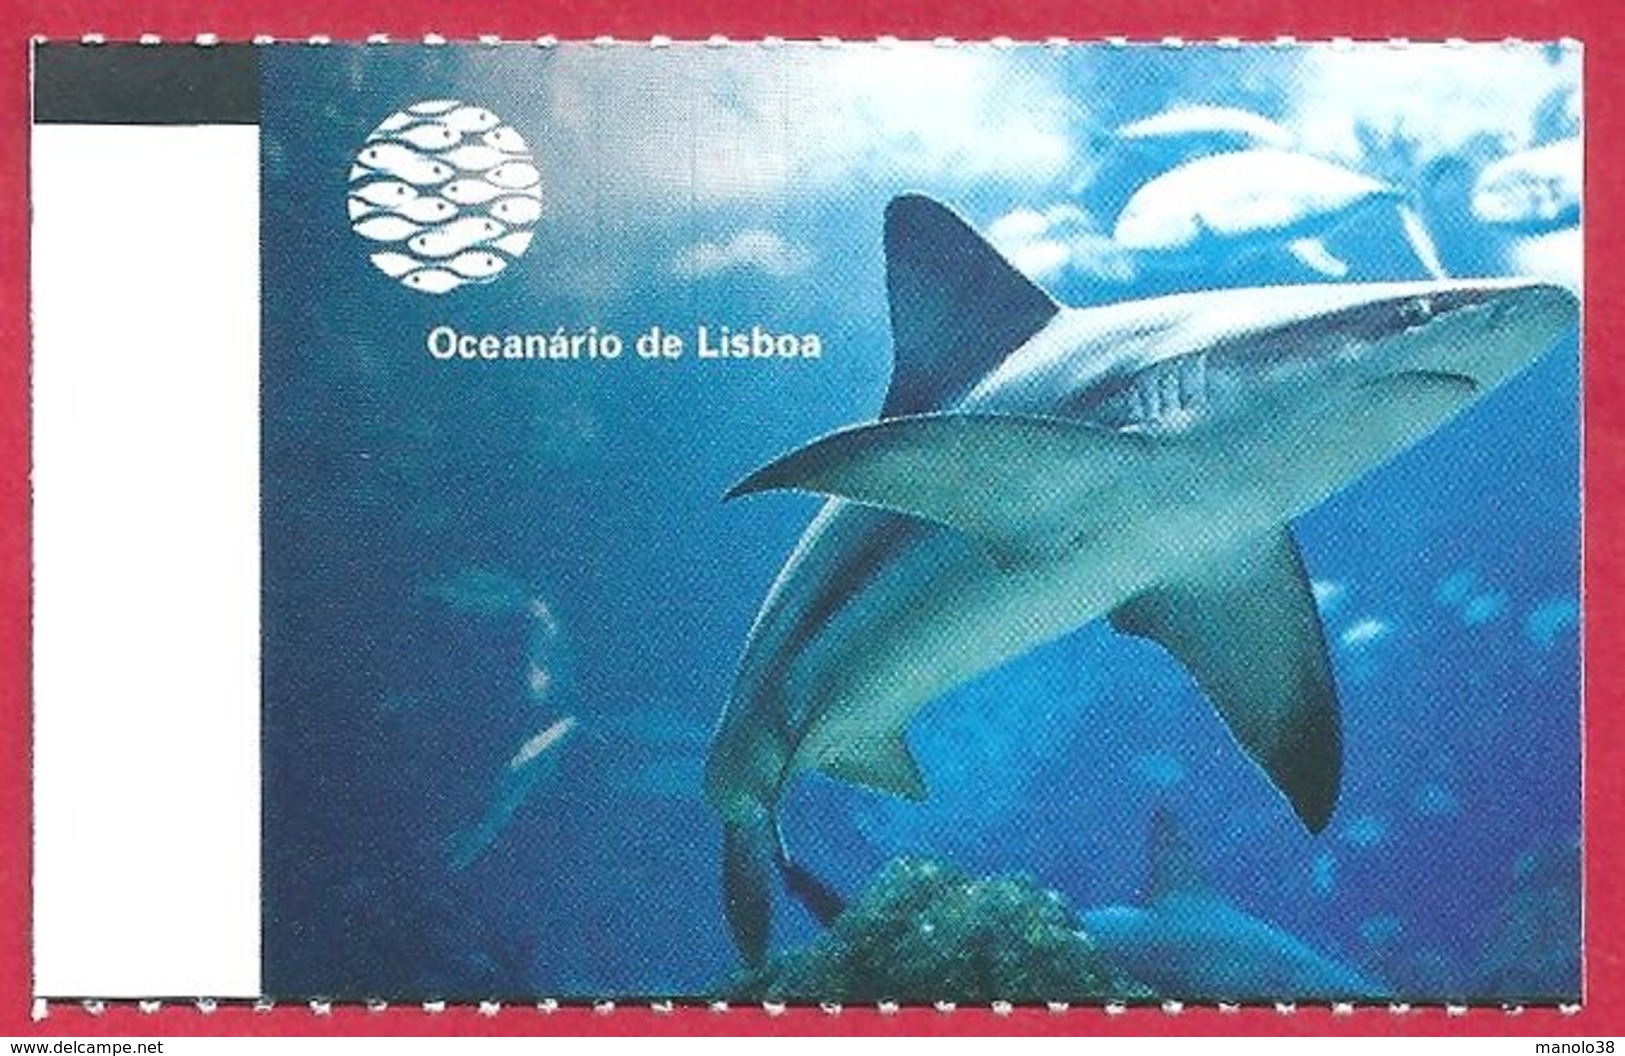 Ticket De L'aquarium De Lisbonne. Portugal. Visuel: Un Requin. 2019. - Tickets - Entradas